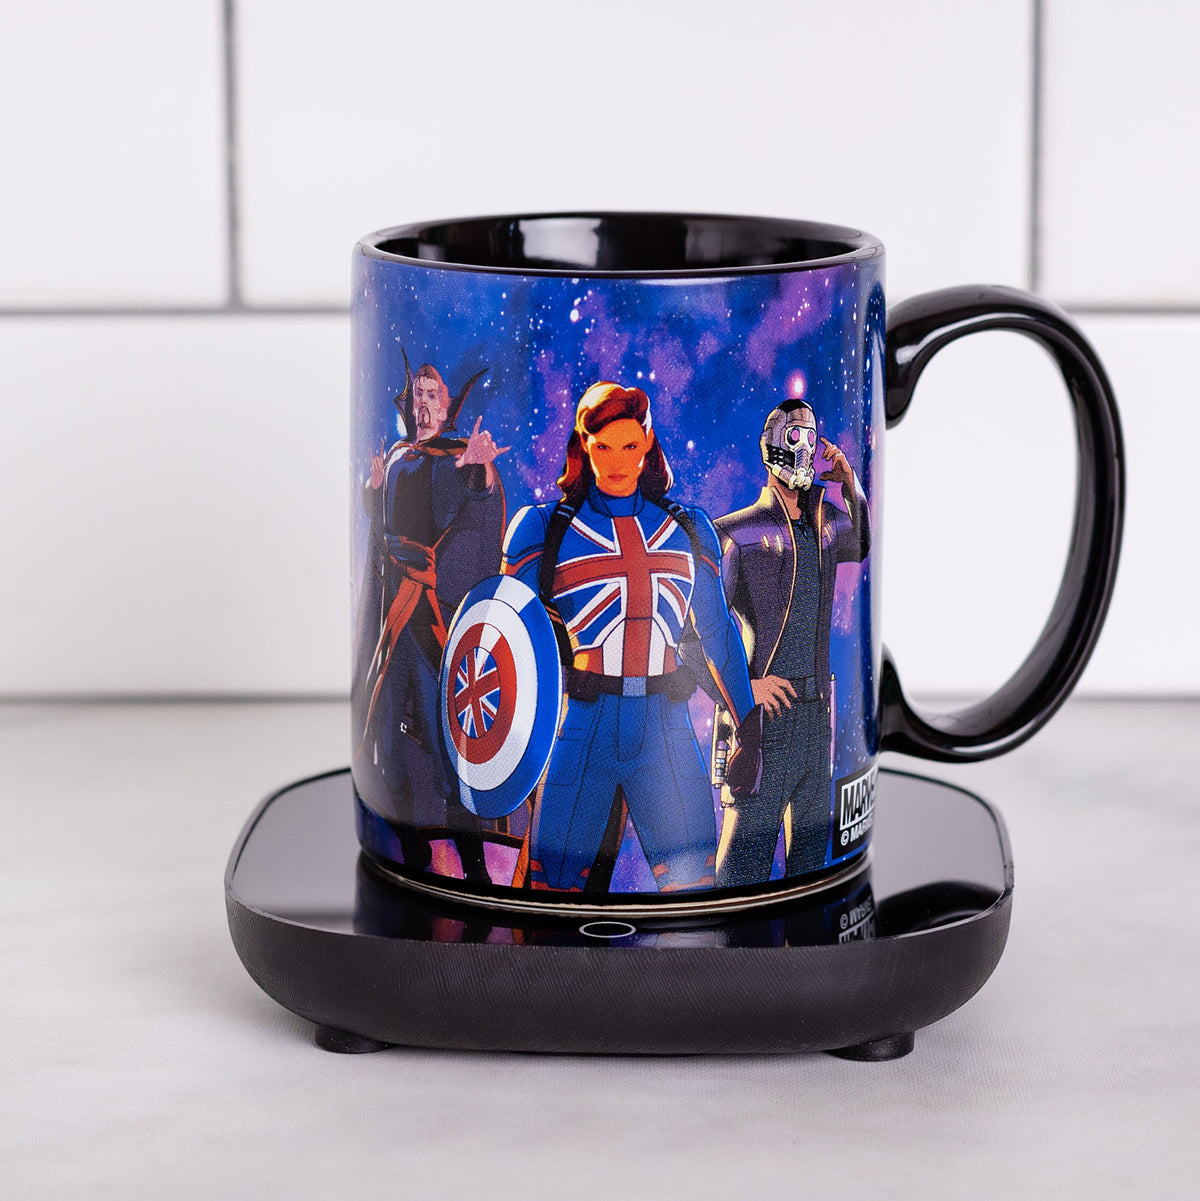 Marvel What If? Mug Warmer Set